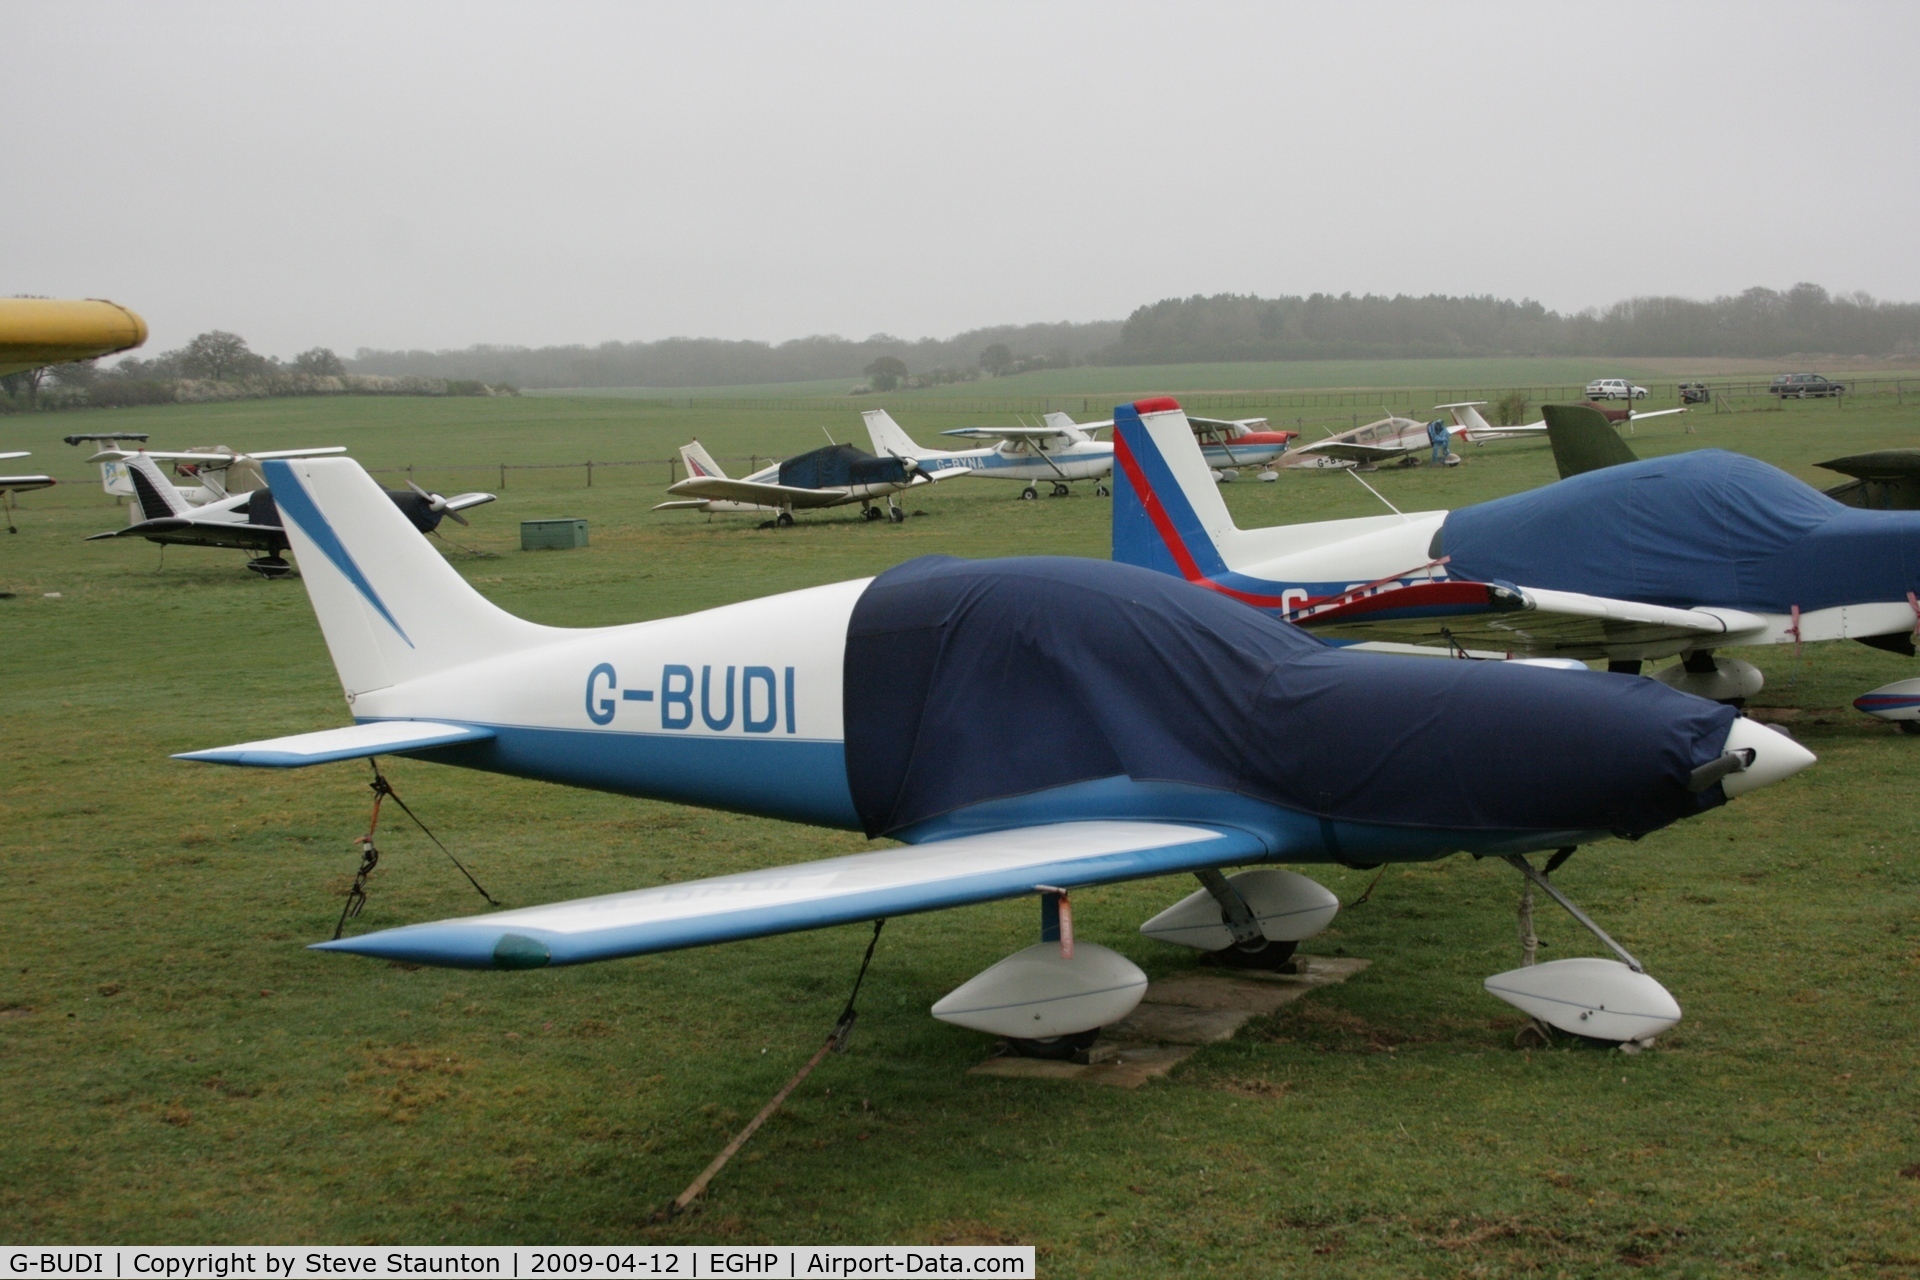 G-BUDI, 1994 Aero Designs Pulsar C/N PFA 202-12185, Taken at Popham Airfield, England on a gloomy April Sunday (12/04/09)